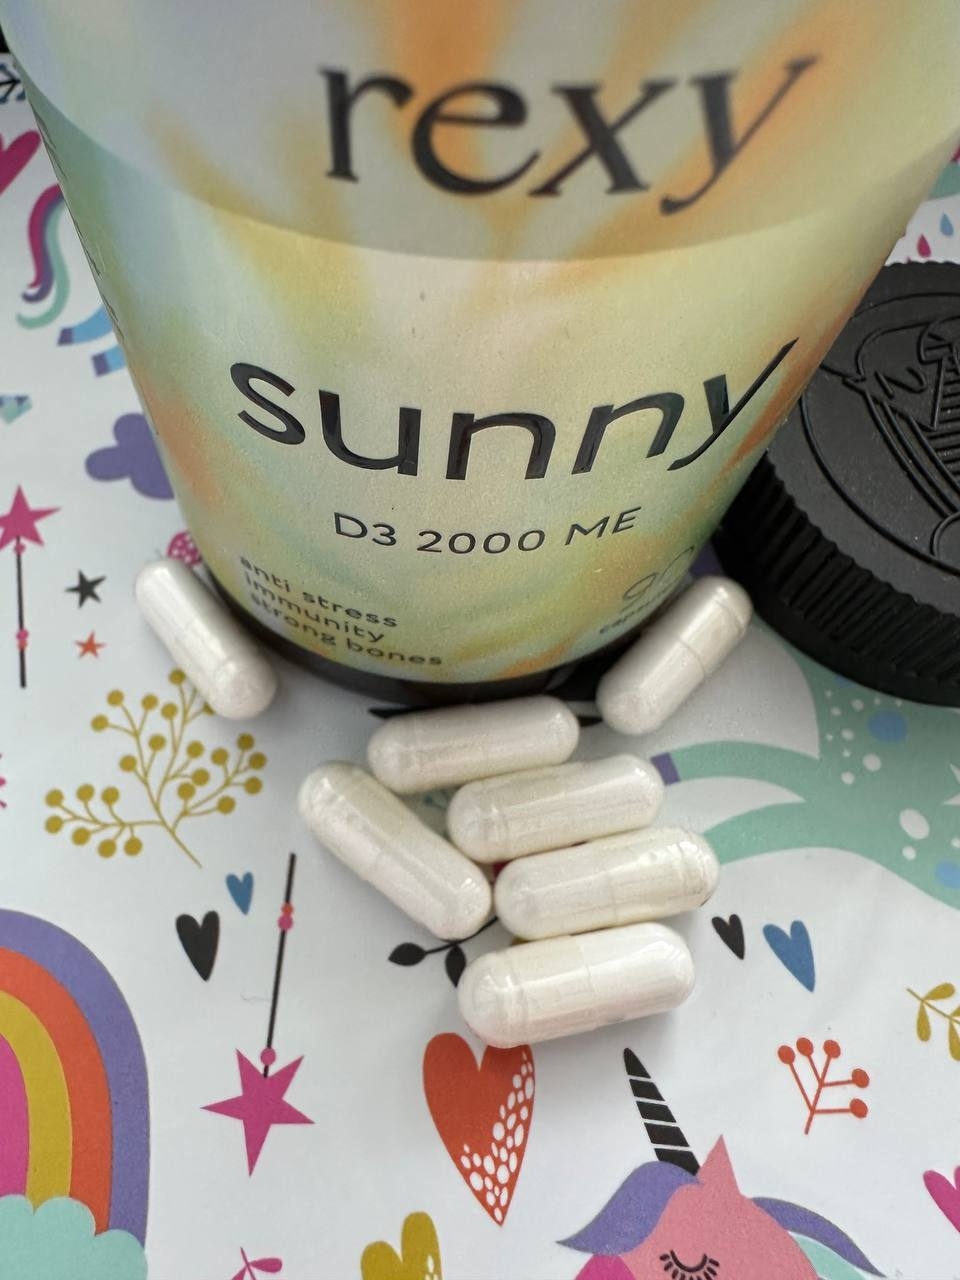 Витамины Rexy Sunny Витамин Д3, (D3 2000 ME), витаминный комплекс для иммунитета метаболизма, нервно - Витамин D3 Rexy sunny 2000 ME. Профилактика дефицита витамина D3